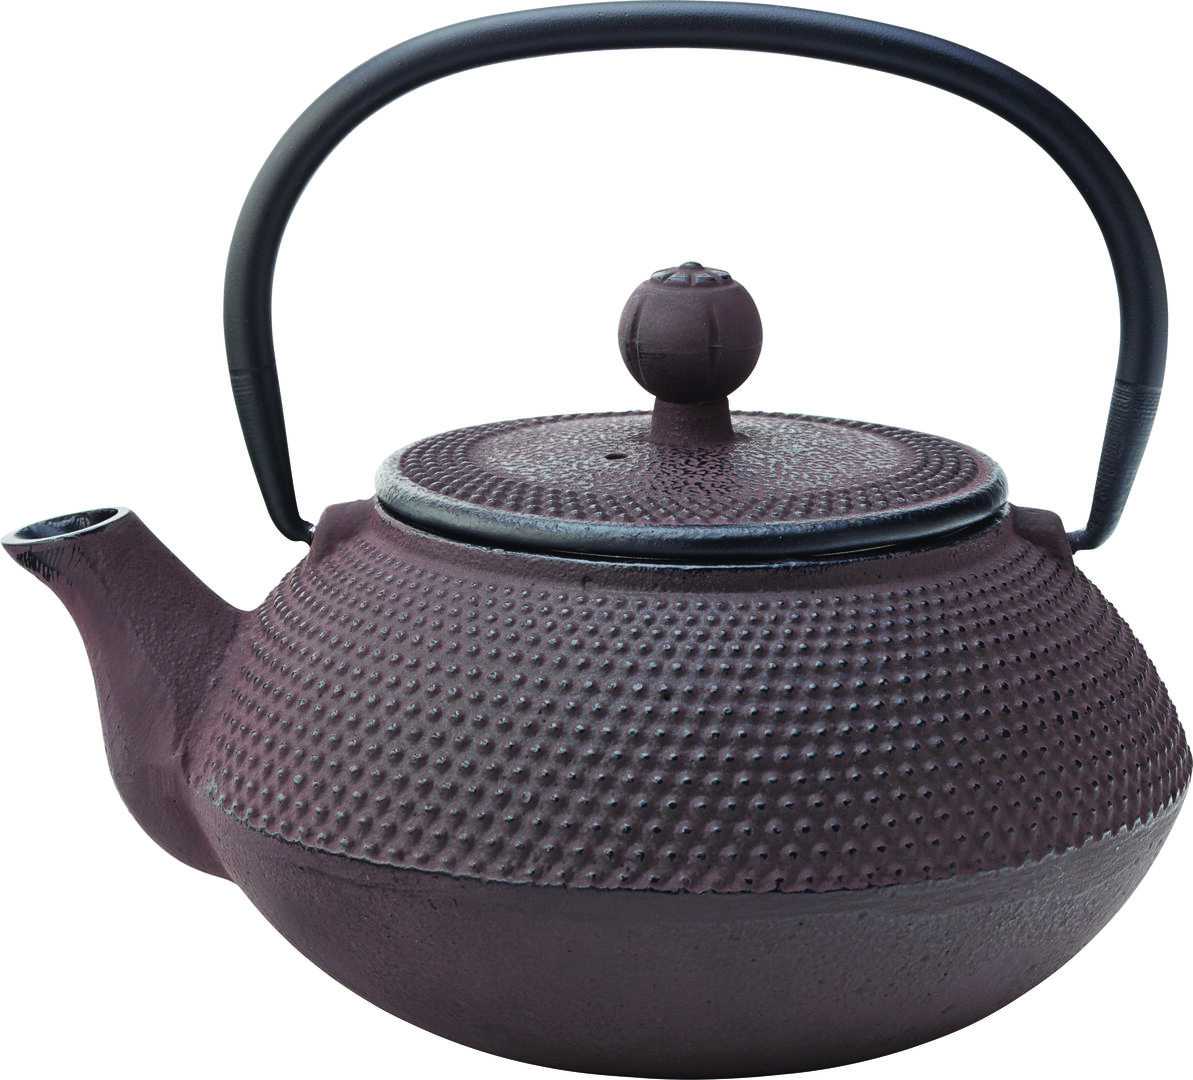 UTOPIA Mandarin Teapot Rustic 24oz (67cl) - with Infuser